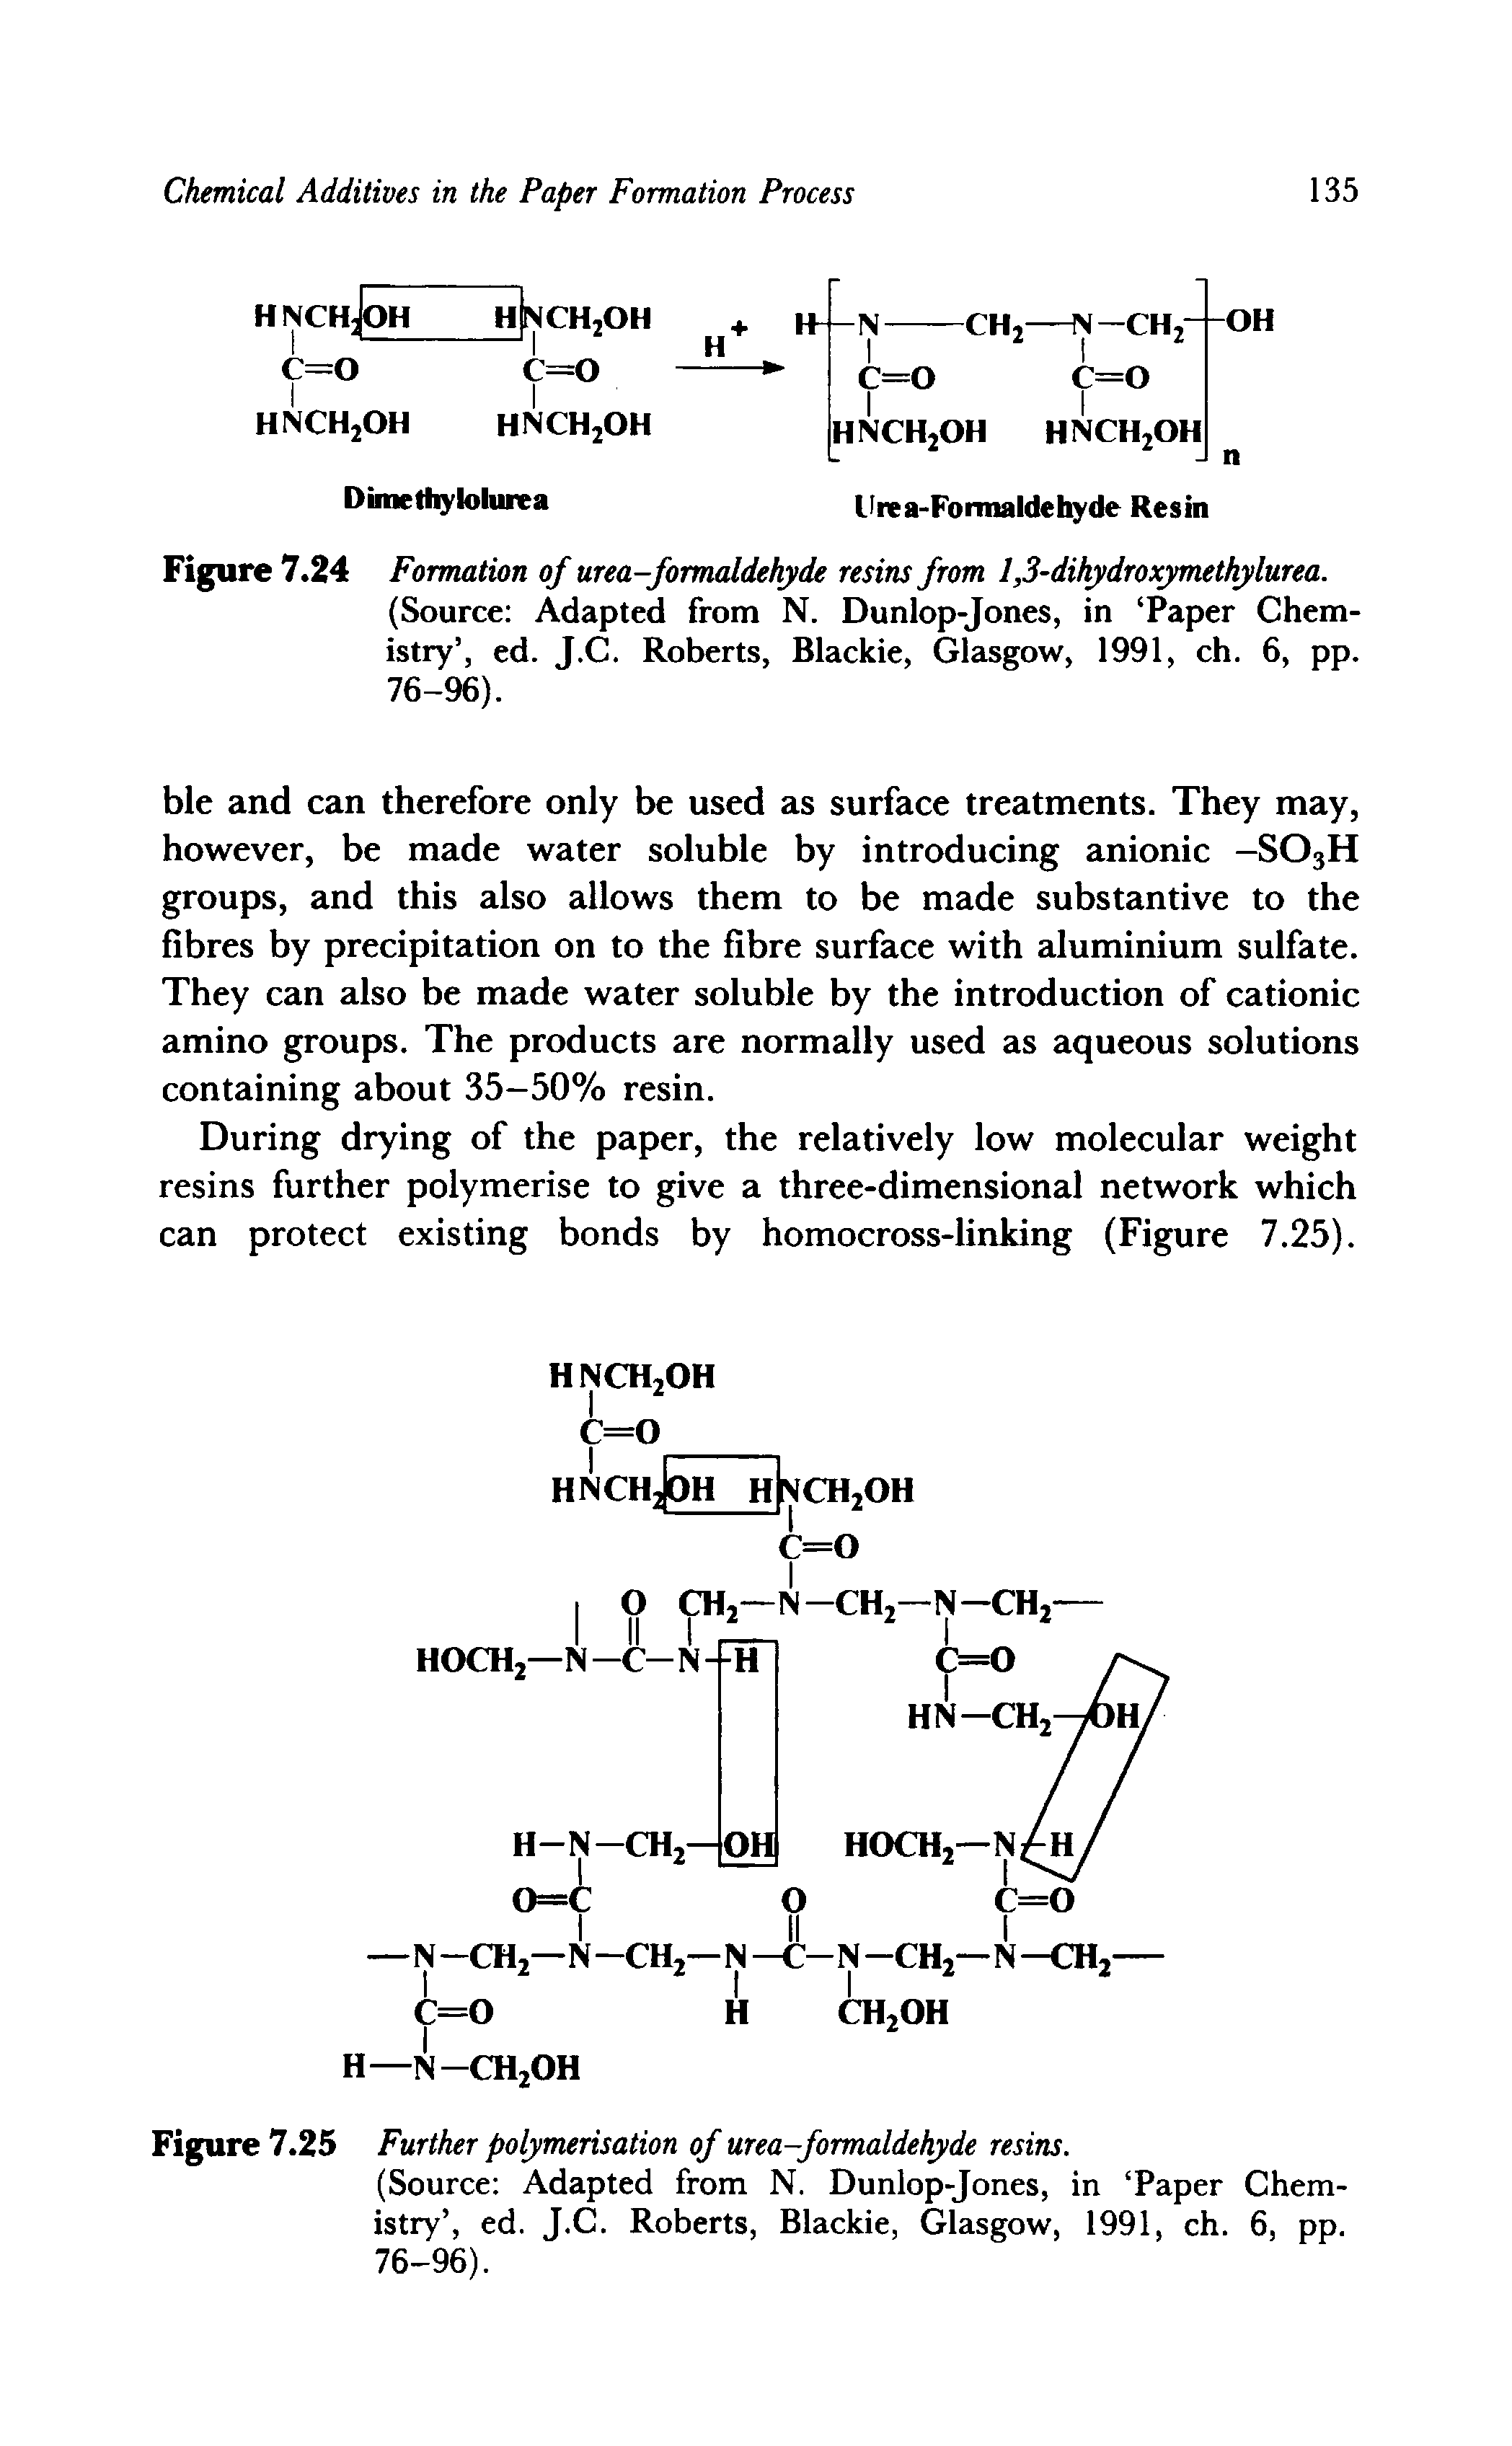 Figure 7.25 Further polymerisation of urea-formaldehyde resins.